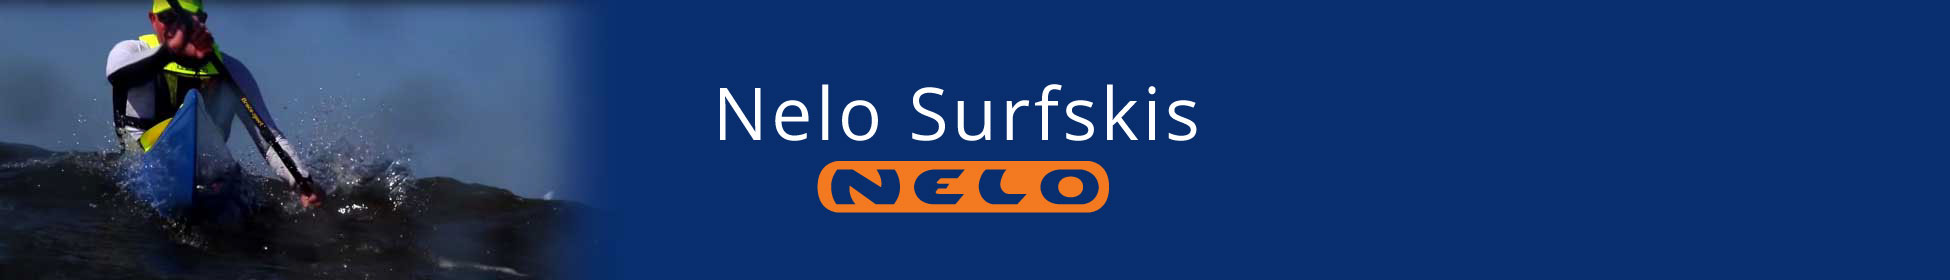 Nelo Surfskis for Sale, 520, 540, 550, 560